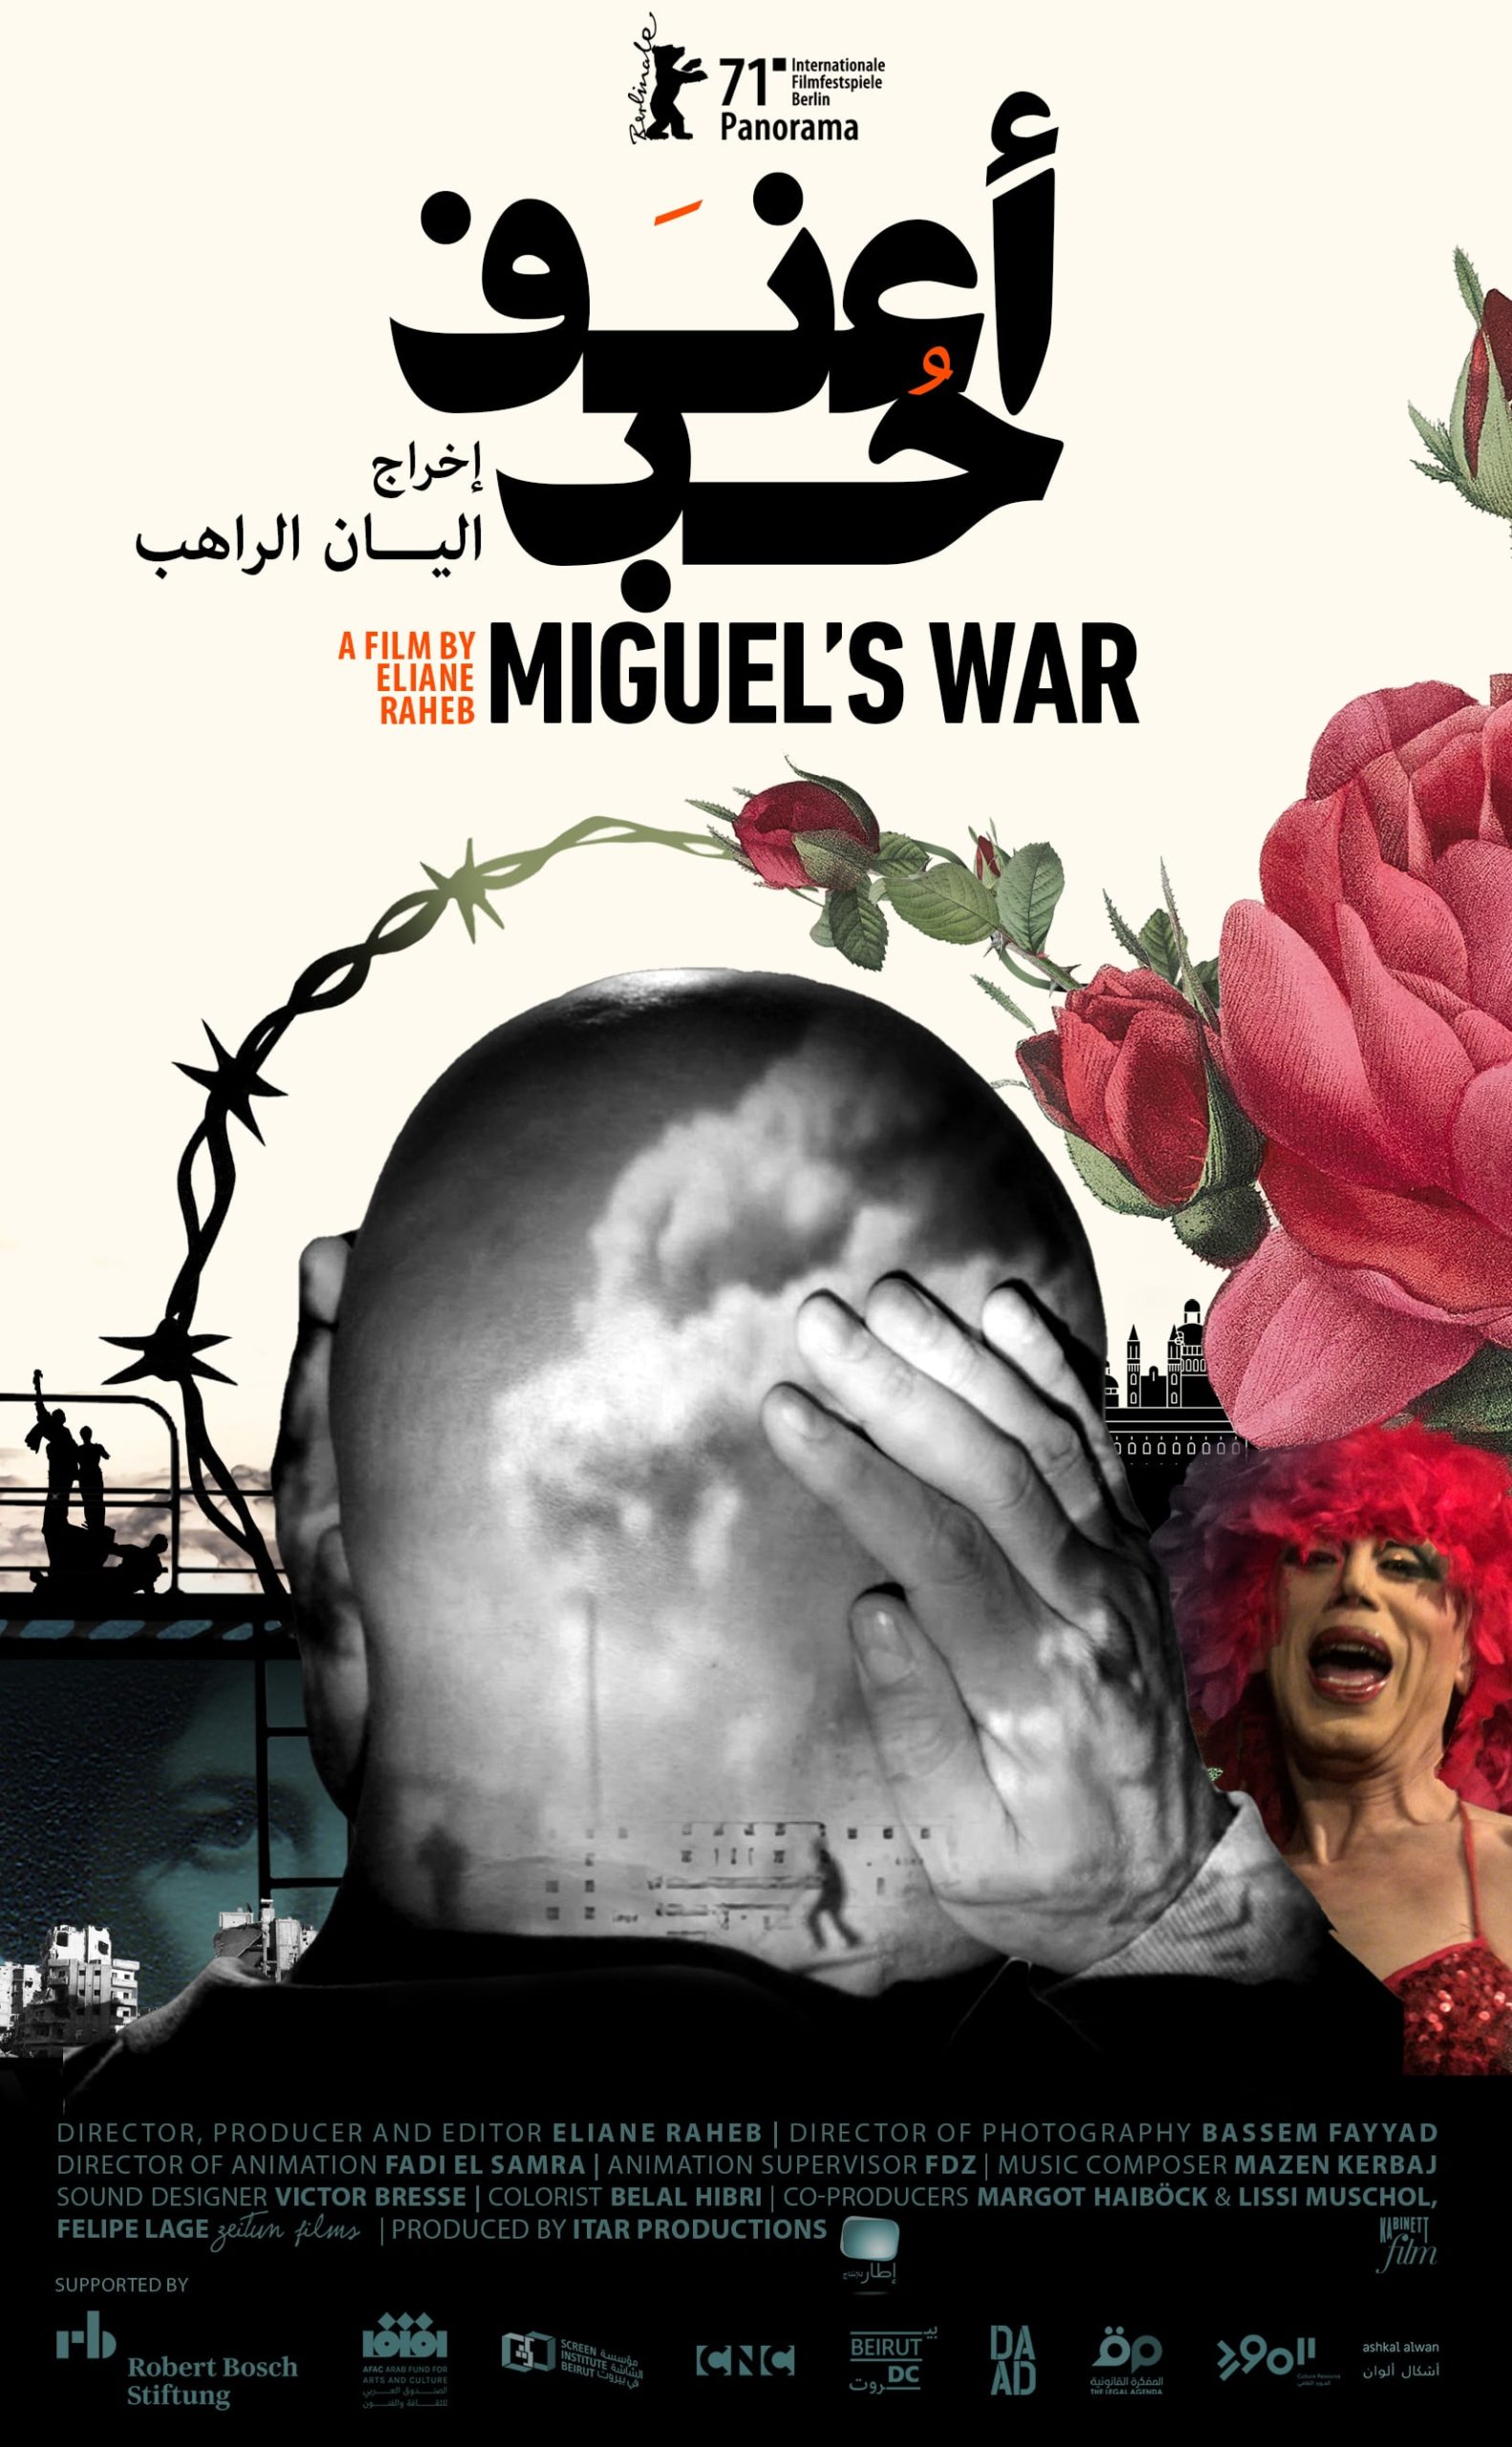 Miguel’s war